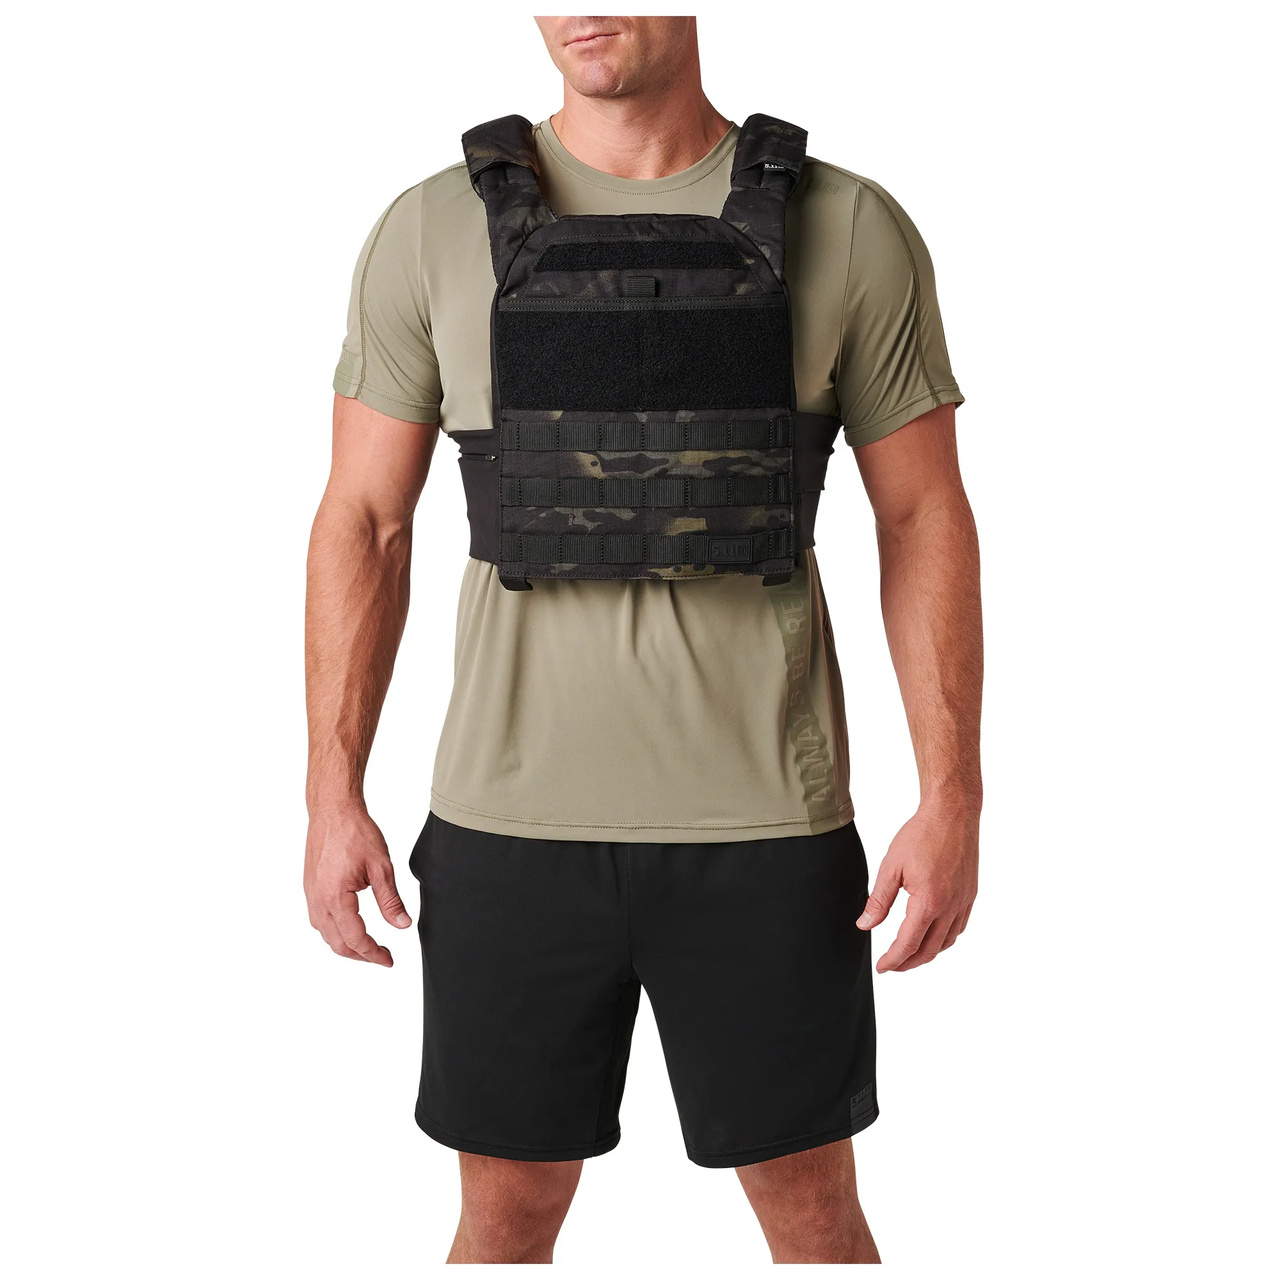 TacTec Trainer Weight Vest Black Multicam, One Size